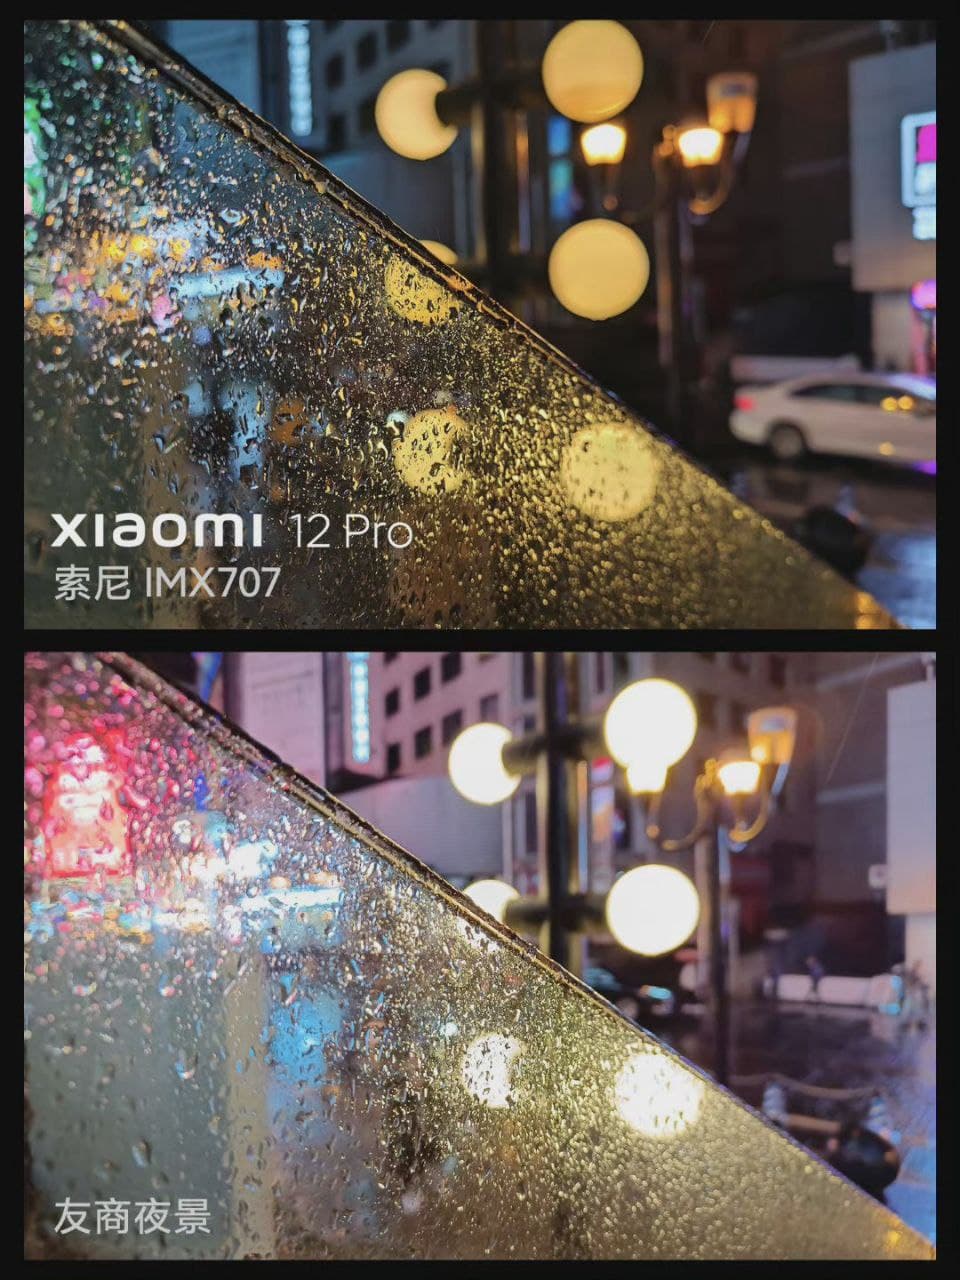 Xiaomi 12 Pro camera pictures